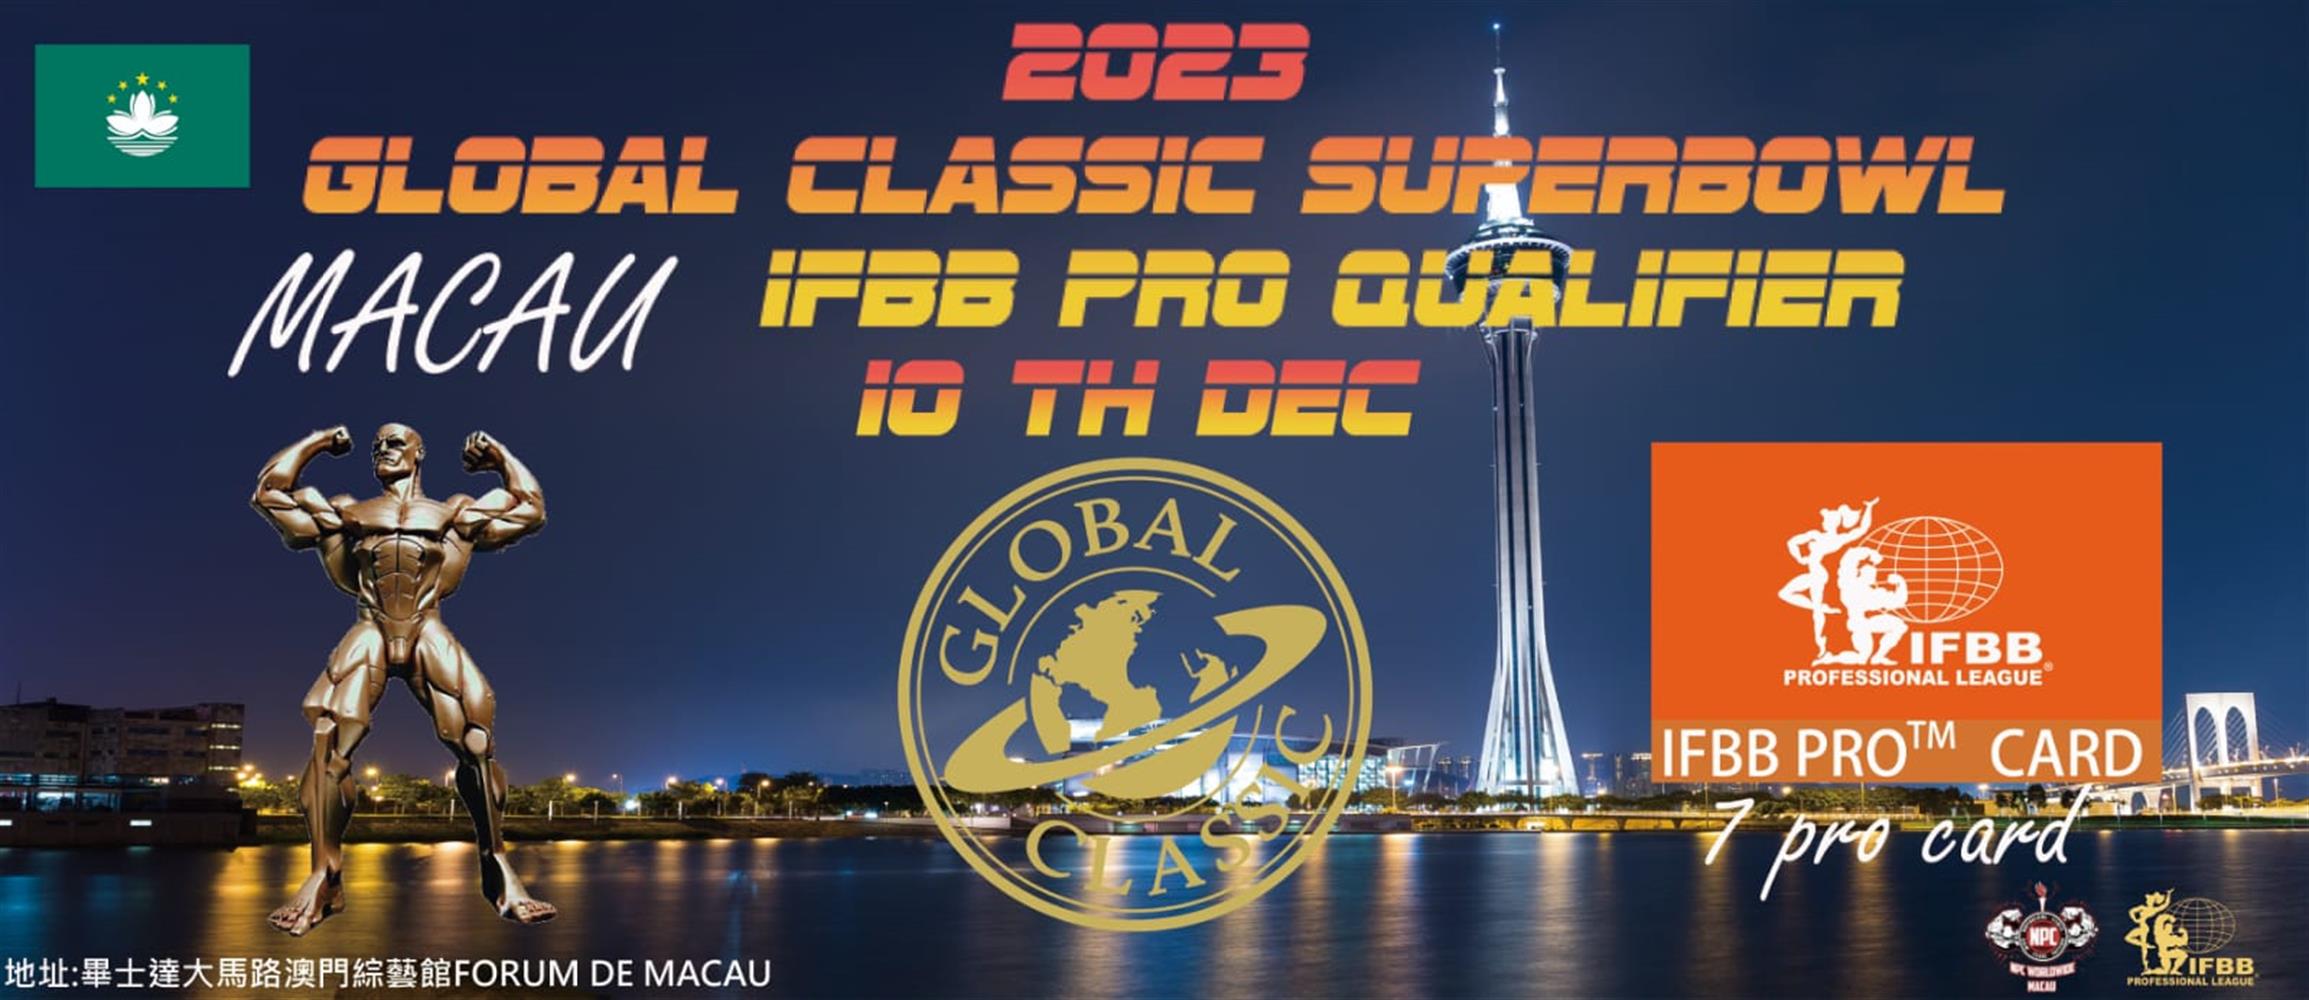 2023 NPC Worldwide Global Classic Superbowl Macau IFBB Pro Qualifier Athlete Registration